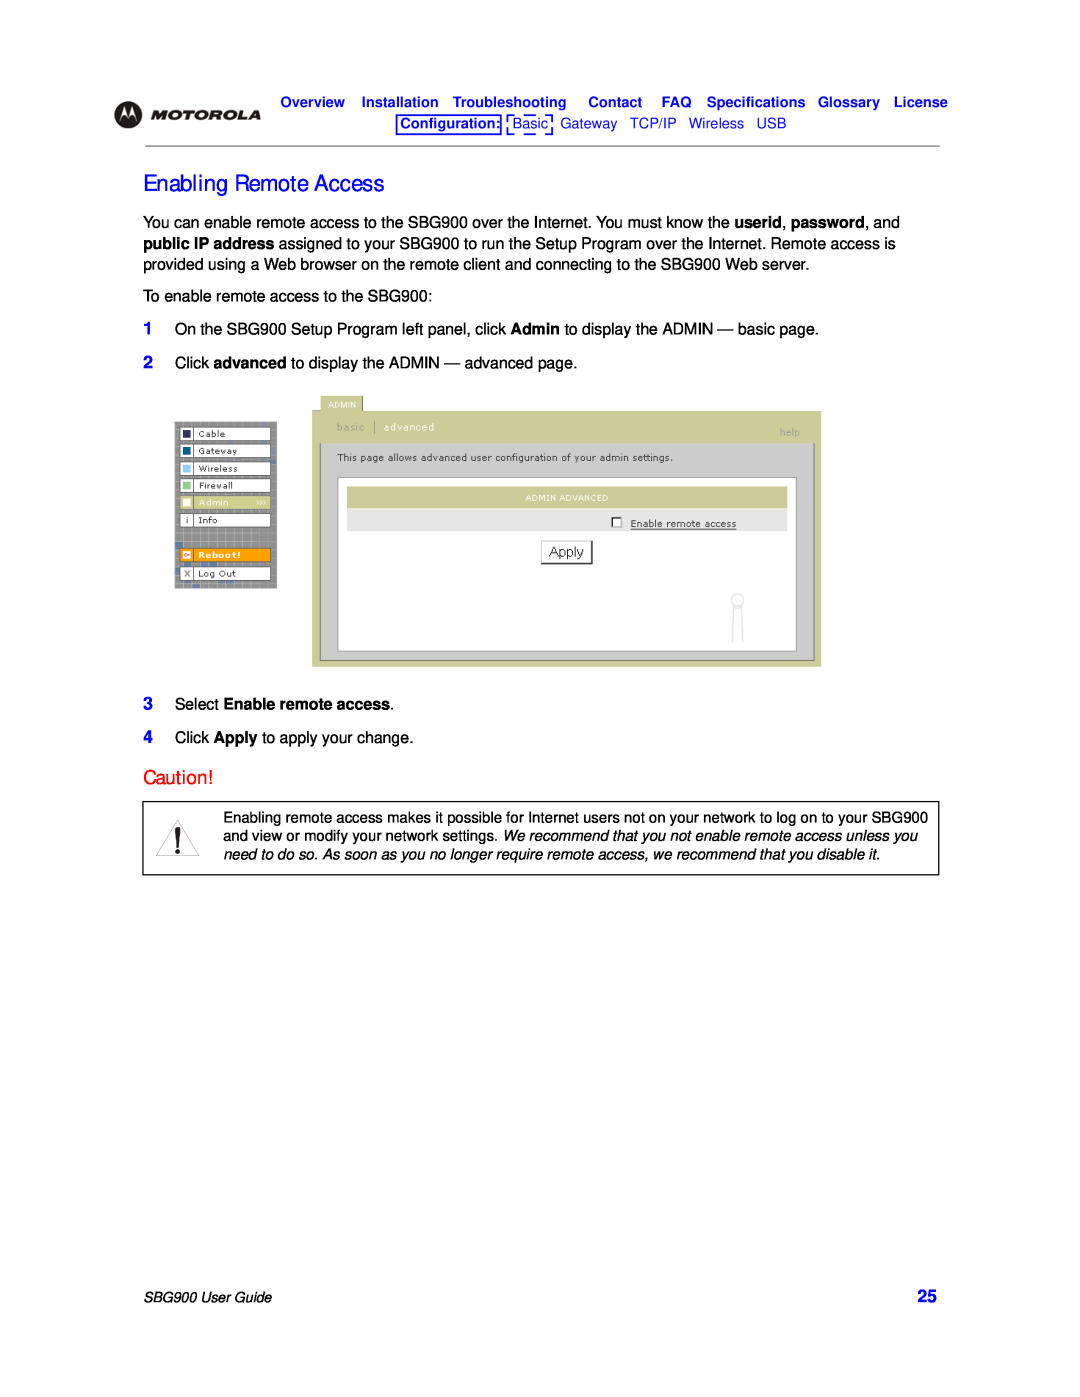 Motorola SBG900 manual Enabling Remote Access, Select Enable remote access 